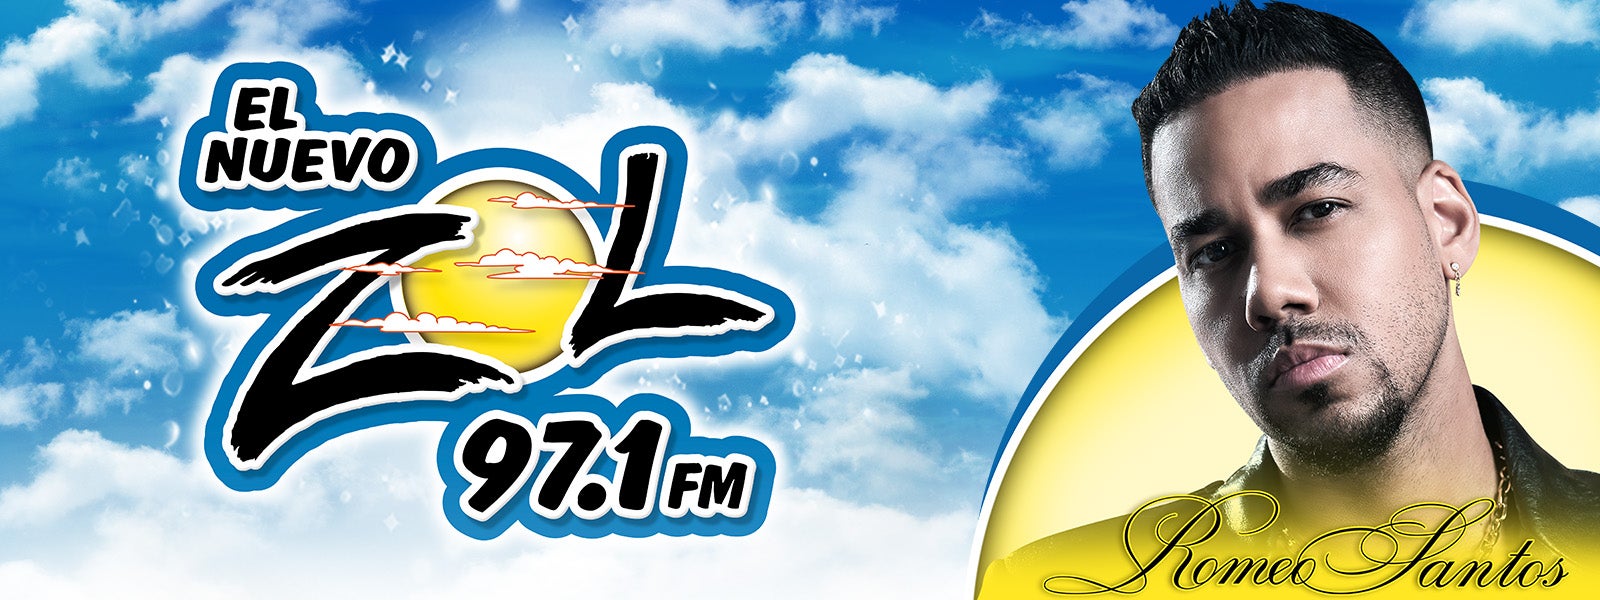 El Zol 97.1FM Presenta Romeo Santos 